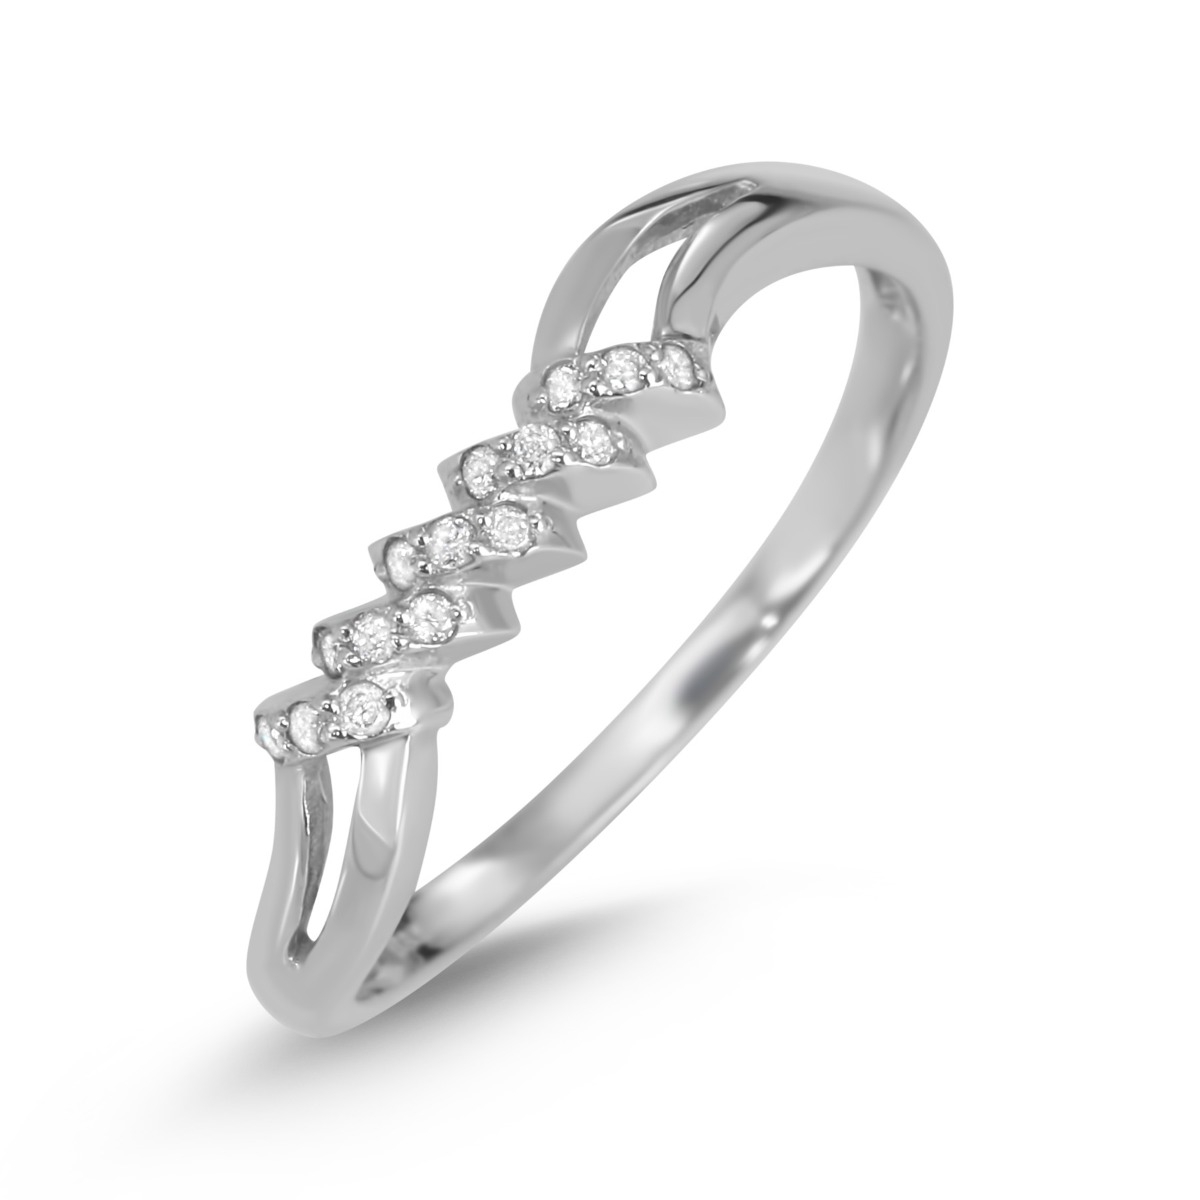 14K White Gold Freeform Zig-Zag Women’s Ring with White Diamond Accents - 1